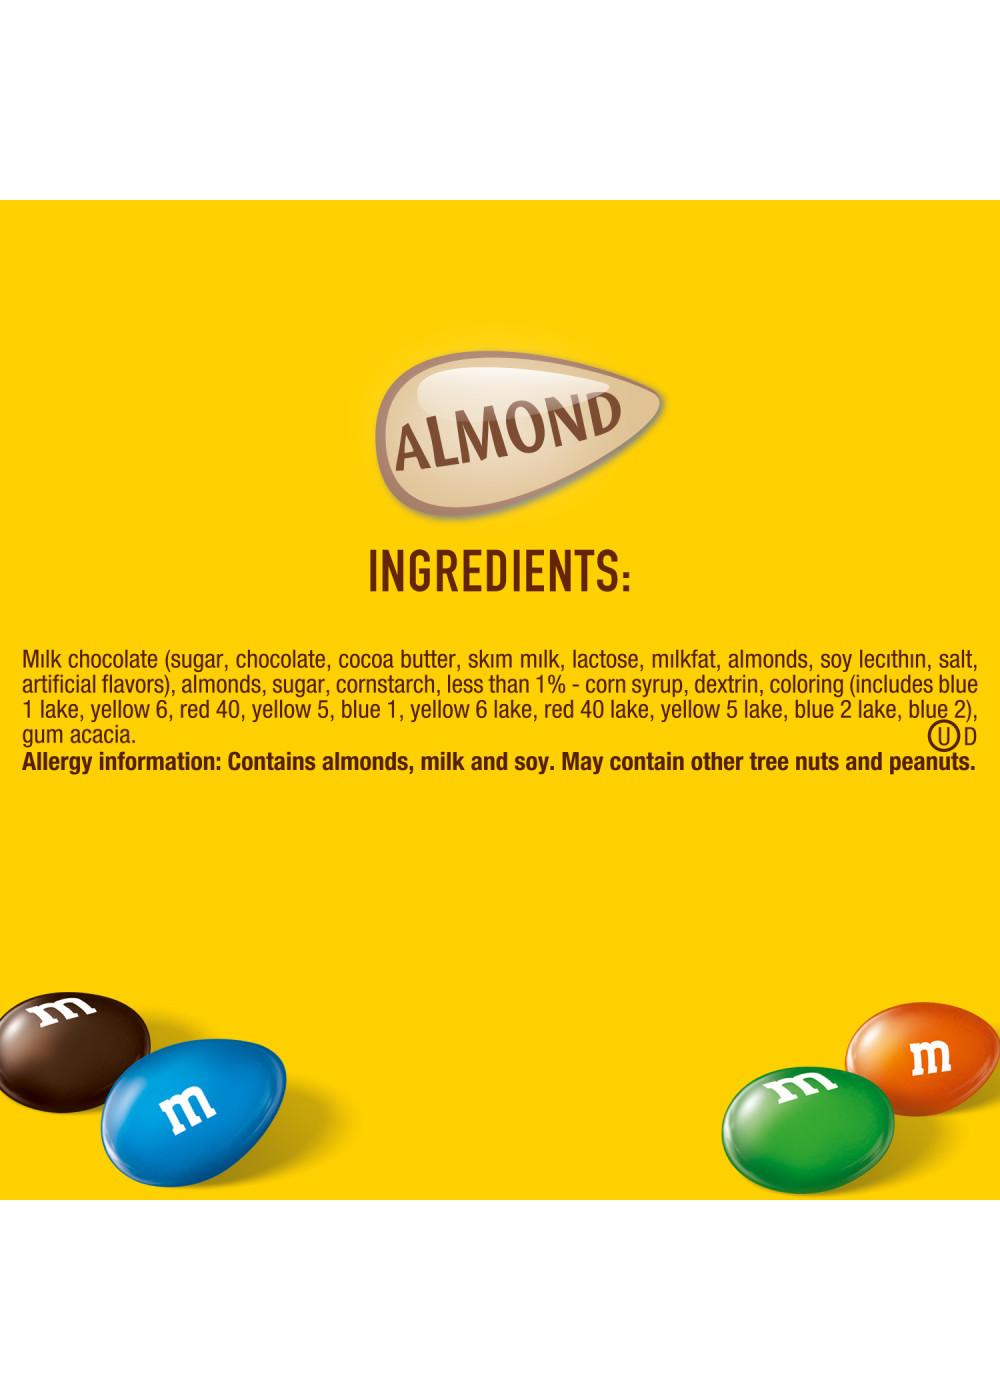 M&M's Chocolate Almond Candies - 9.3 oz bag